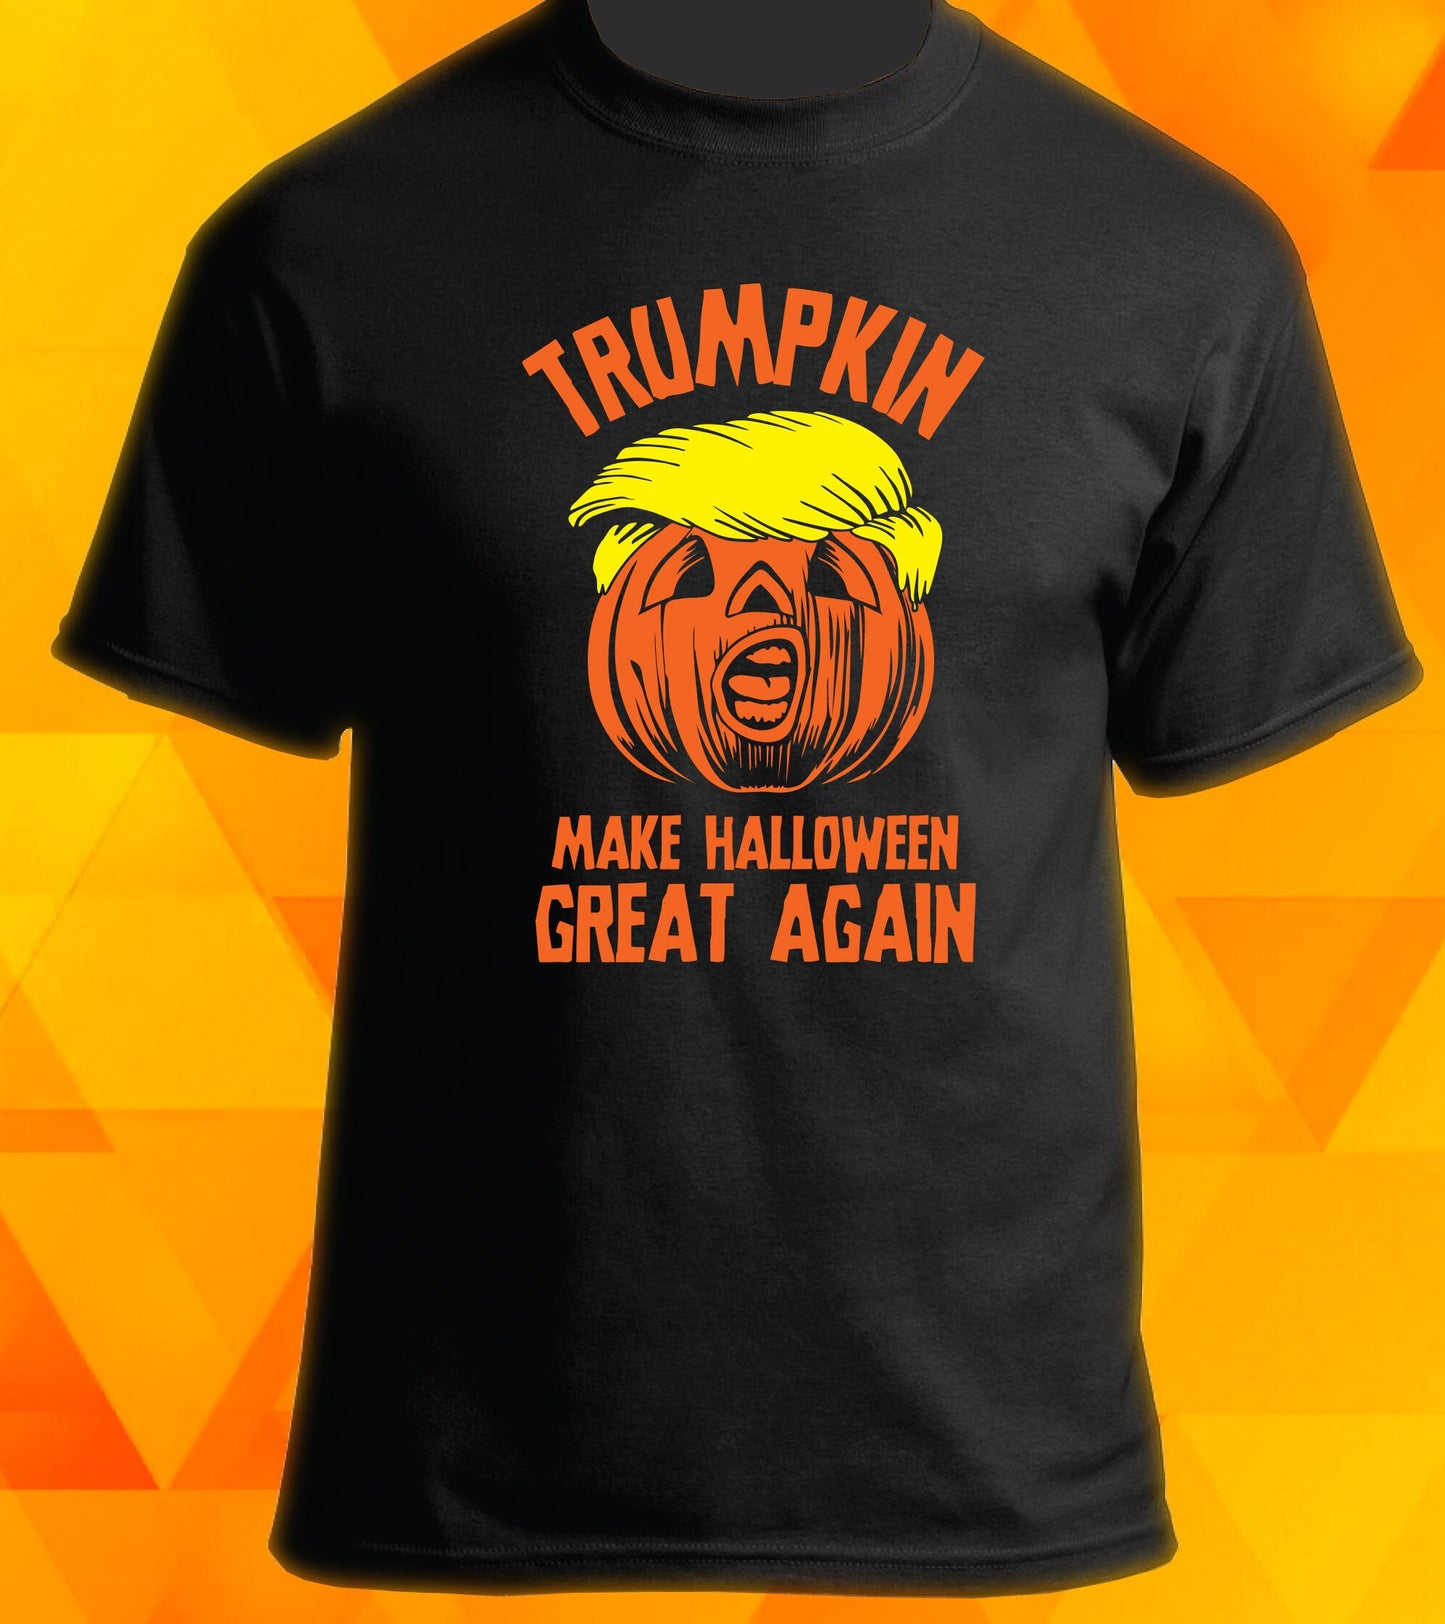 Trumpkin - Make Halloween Great Again T-Shirt, Funny Trump Pumpkin